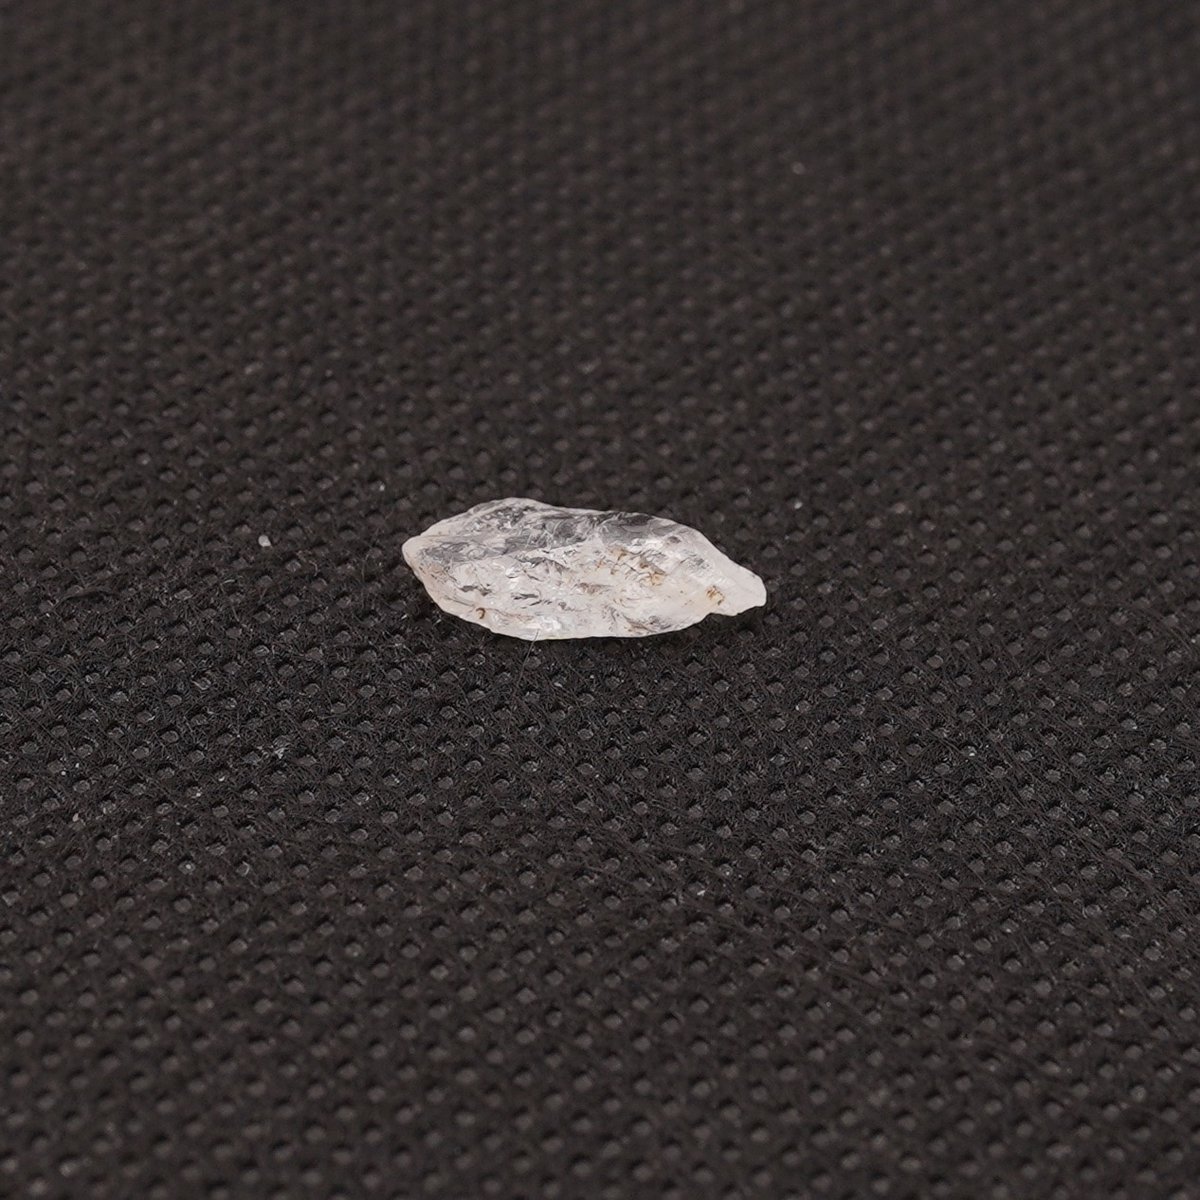 Fenacit nigerian cristal natural unicat f163